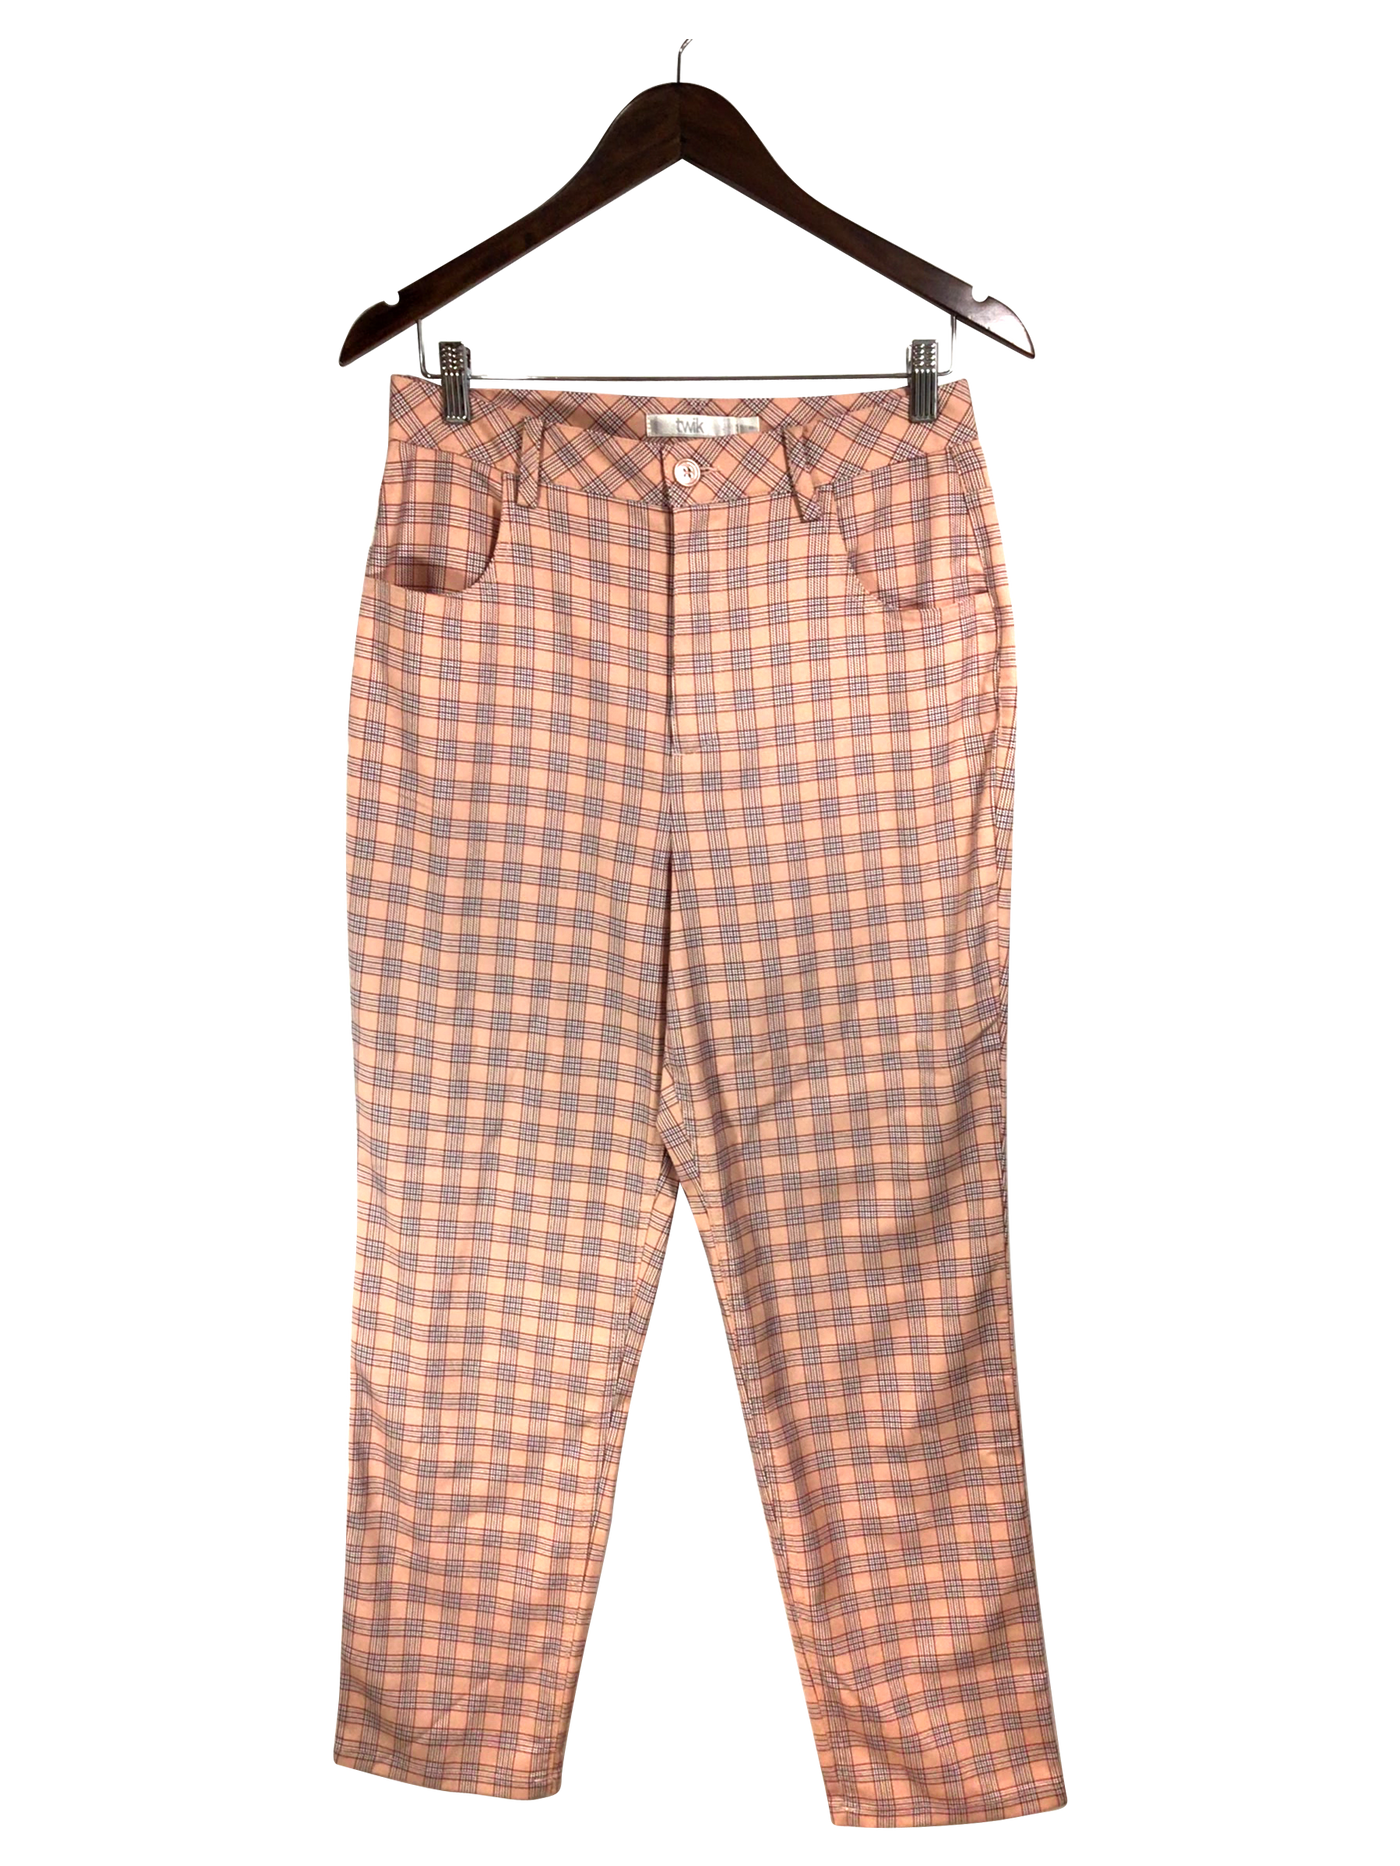 TWIK Pant Regular fit in Pink - Size 9 | 10.39 $ KOOP